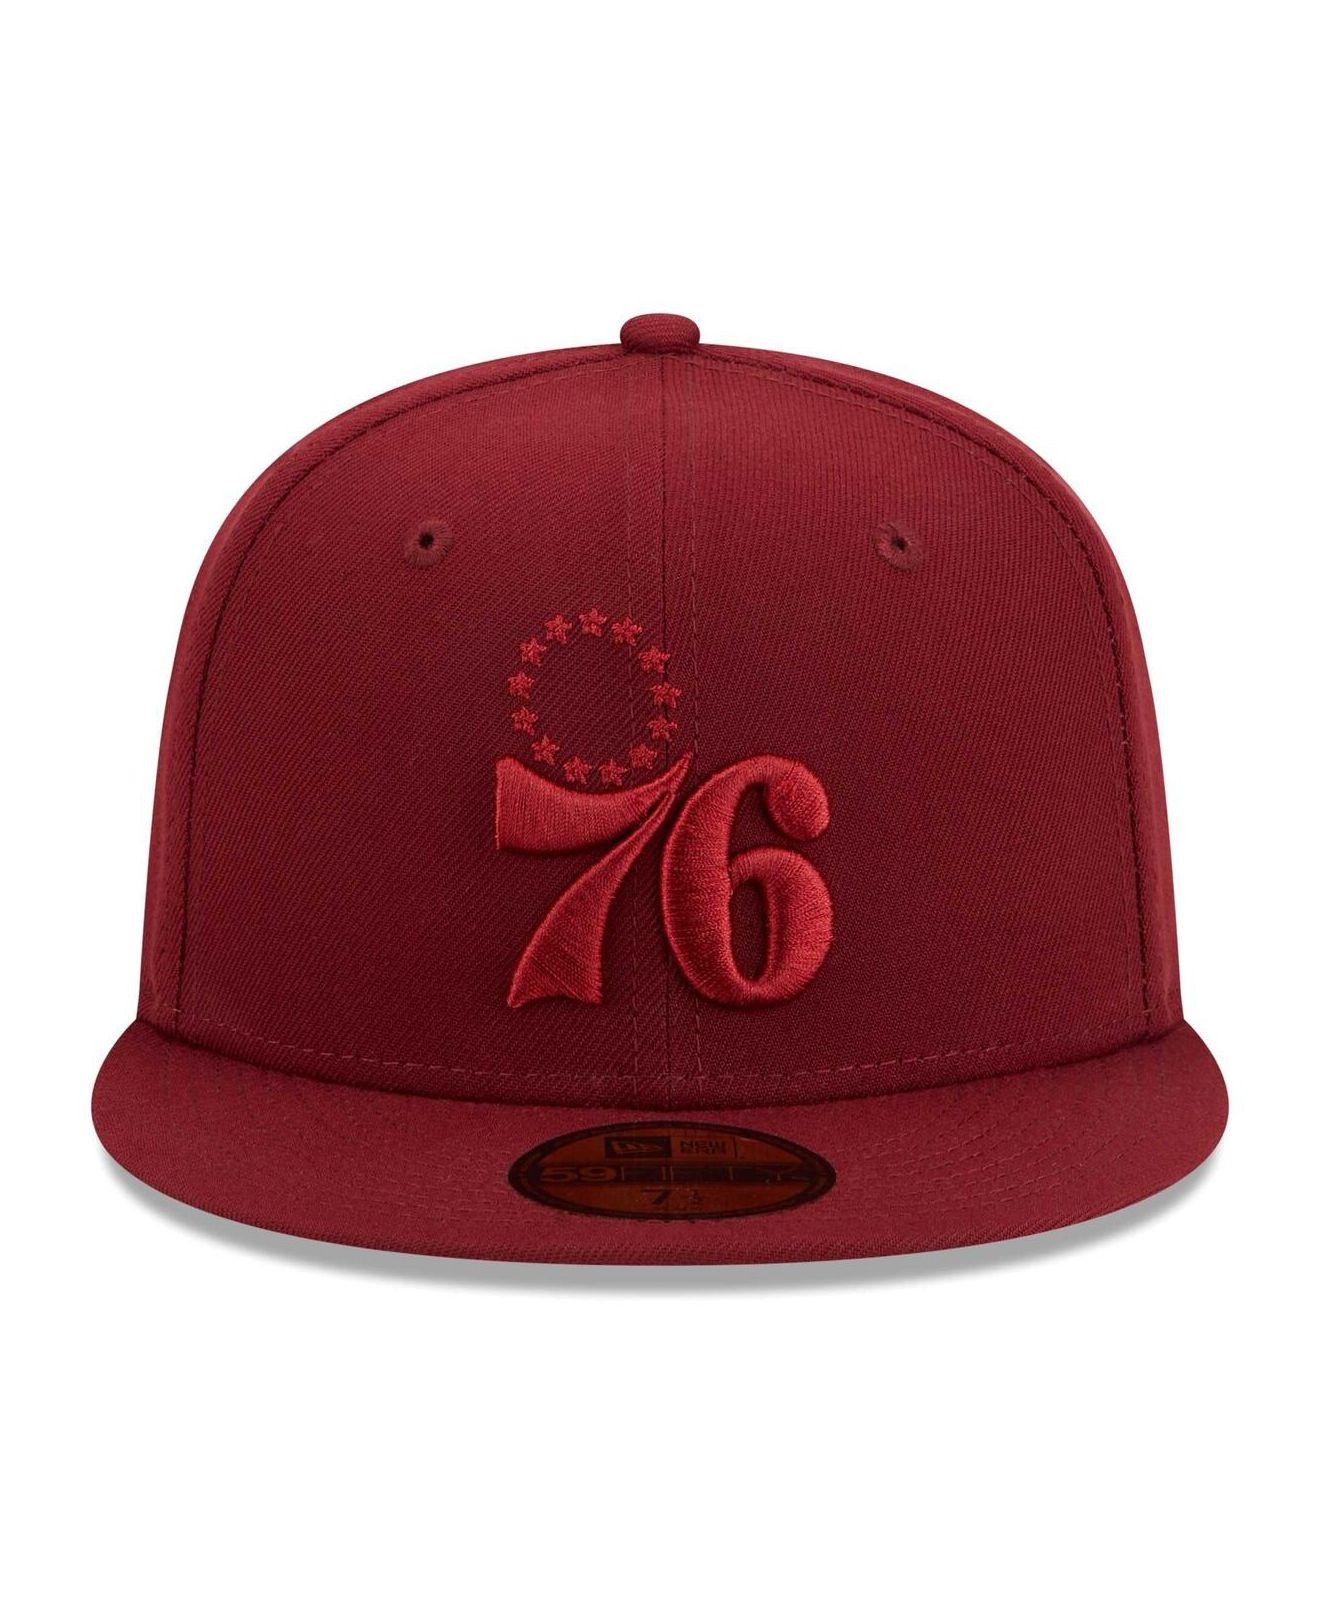 New Era / Men's Philadelphia Eagles Color Pack 59Fifty Olive Fitted Hat